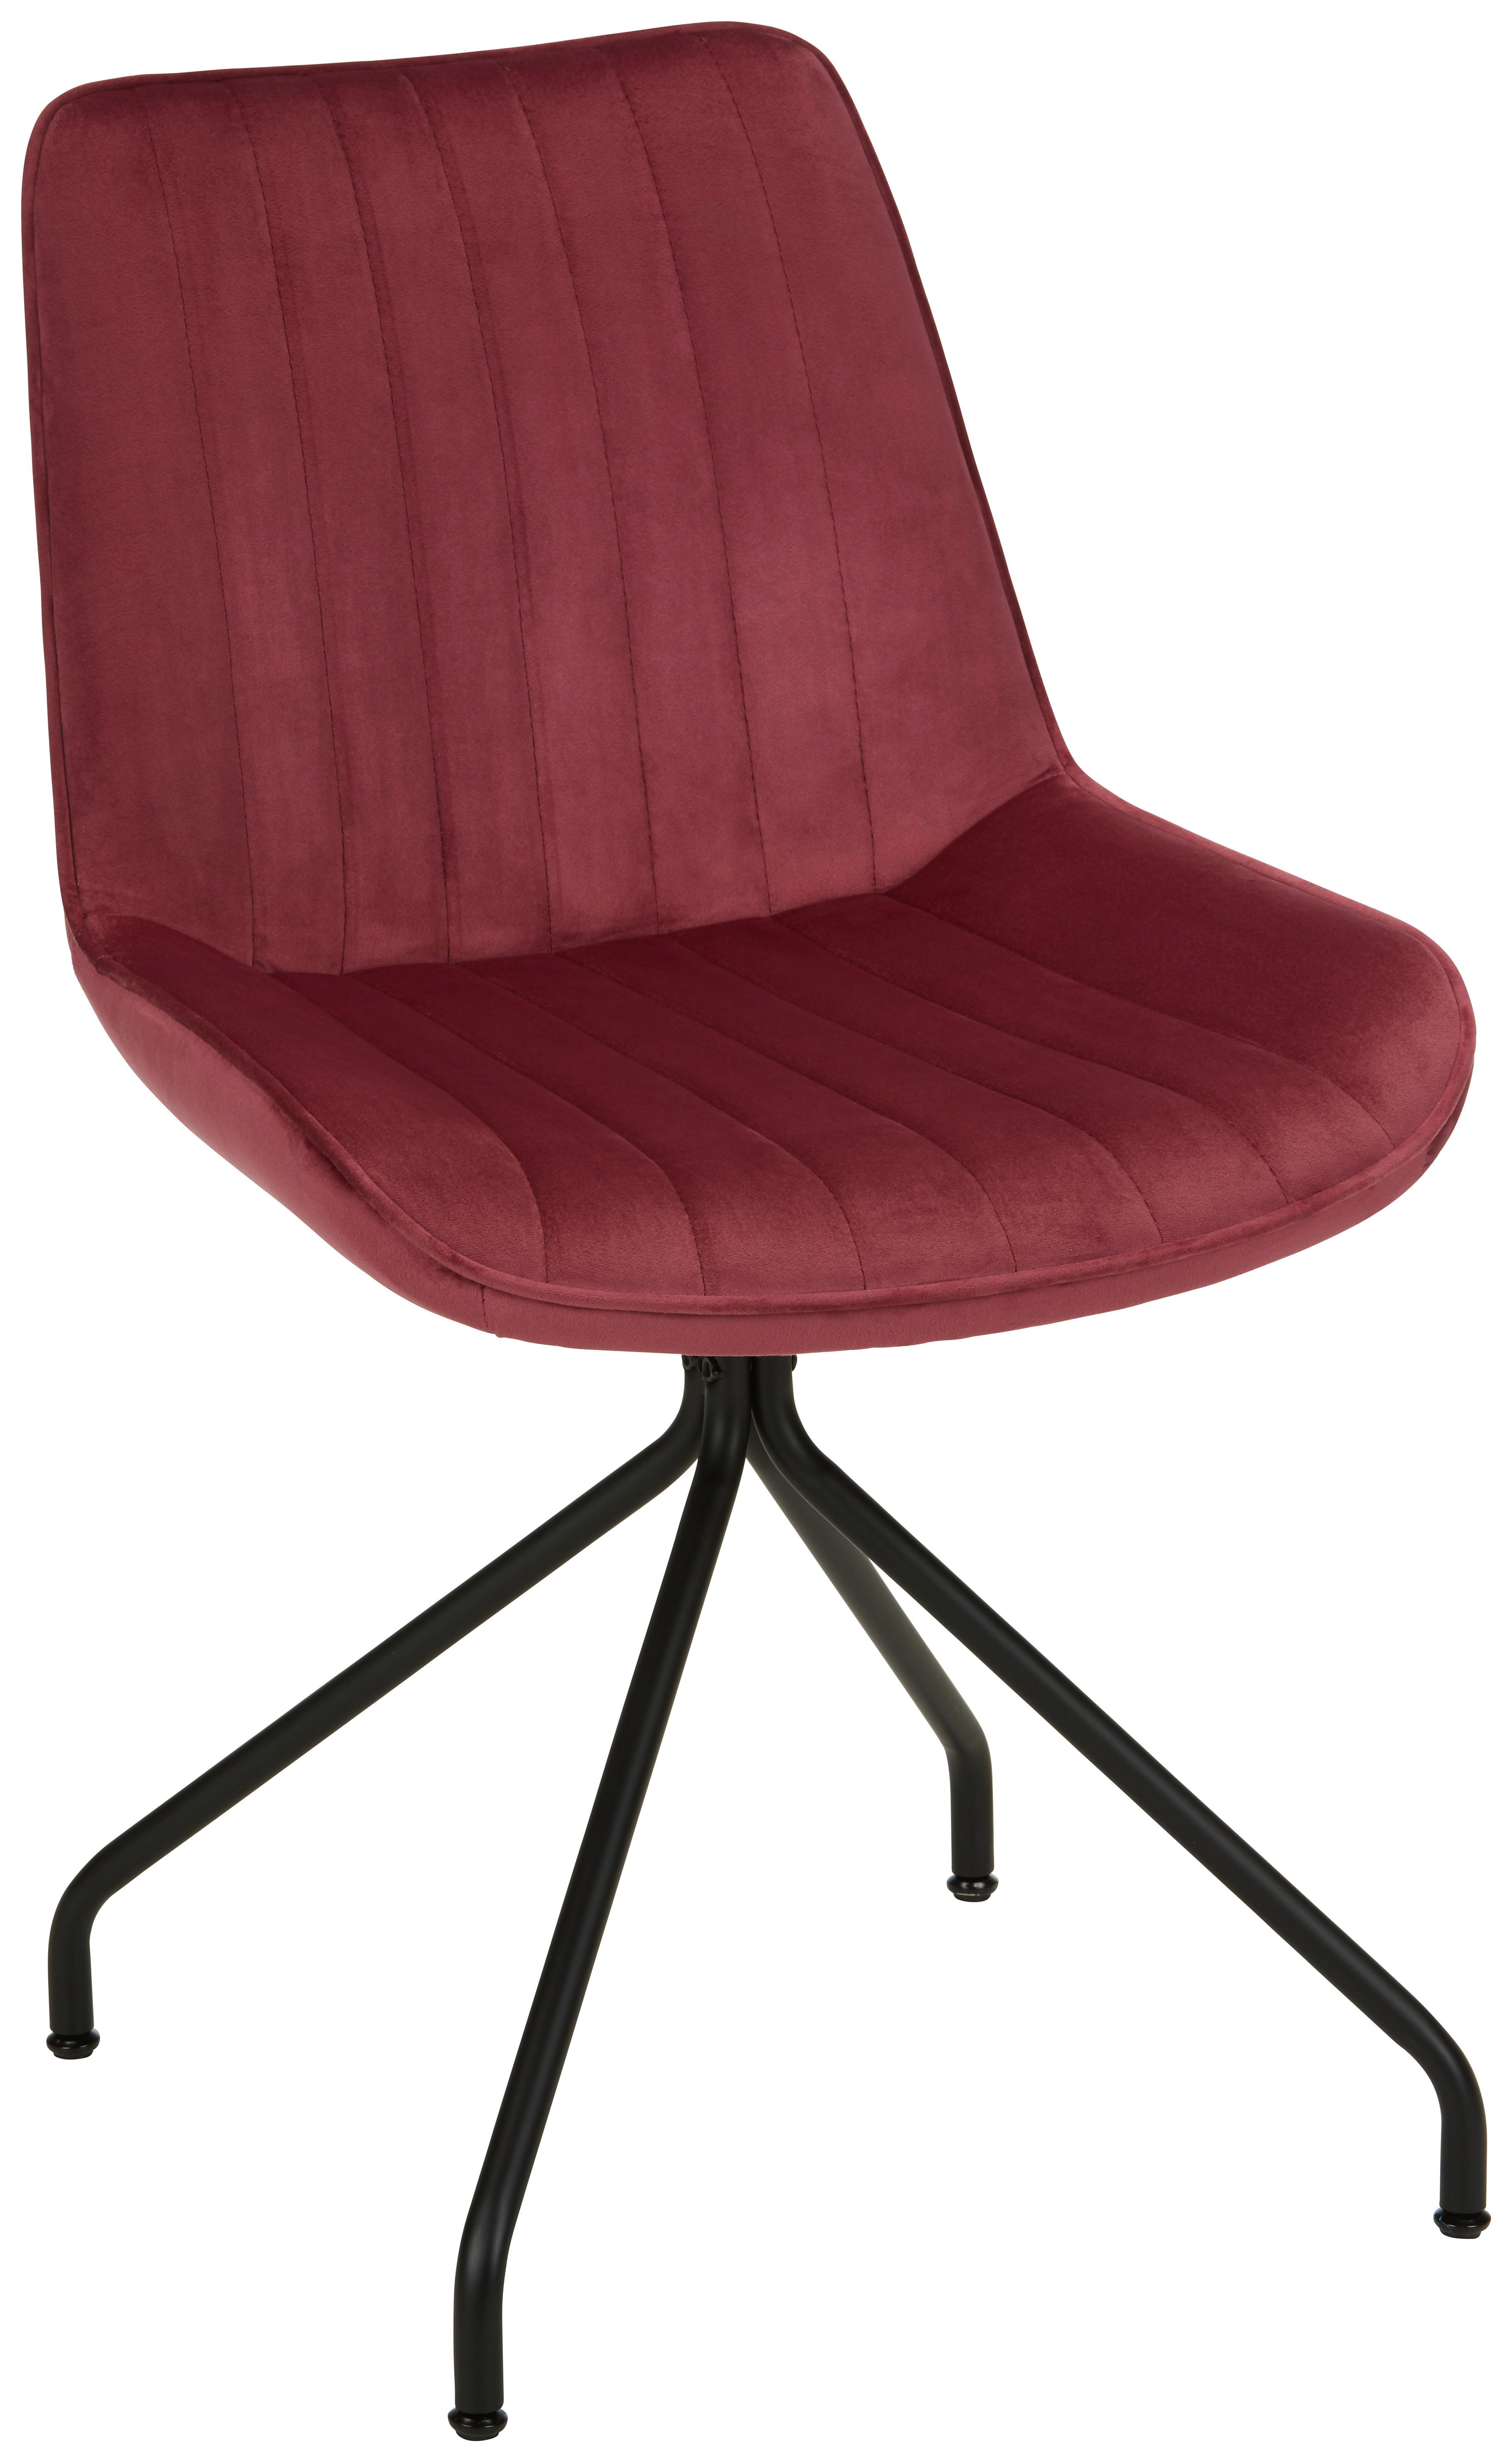 Stuhl aus Samt in Rot - Rot/Schwarz, MODERN, Textil/Metall (50/83,5/51cm) - Modern Living